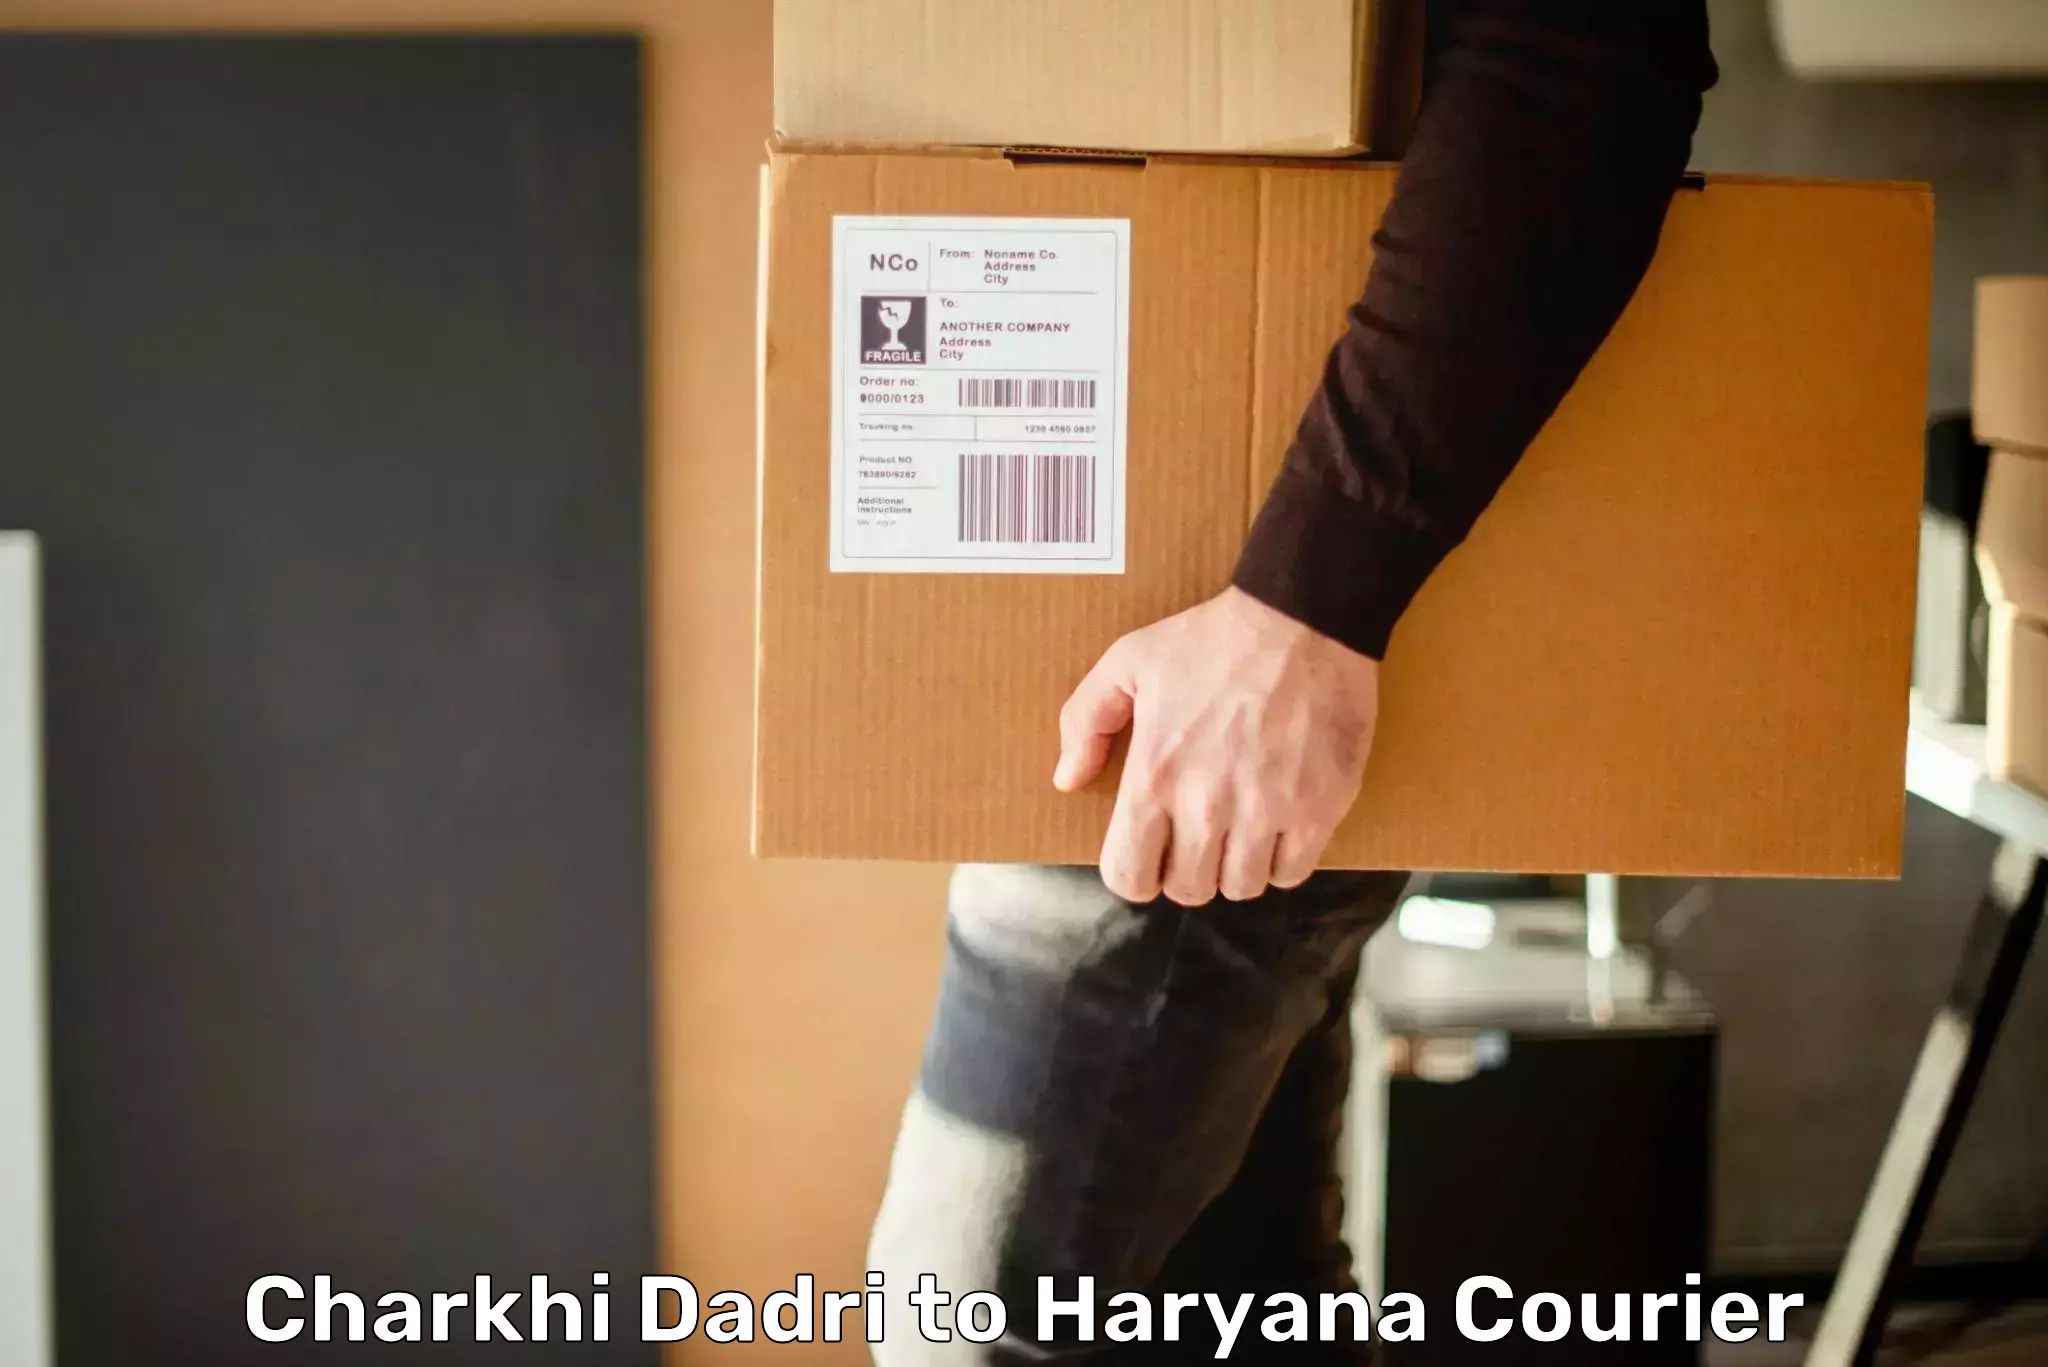 Global logistics network Charkhi Dadri to Haryana